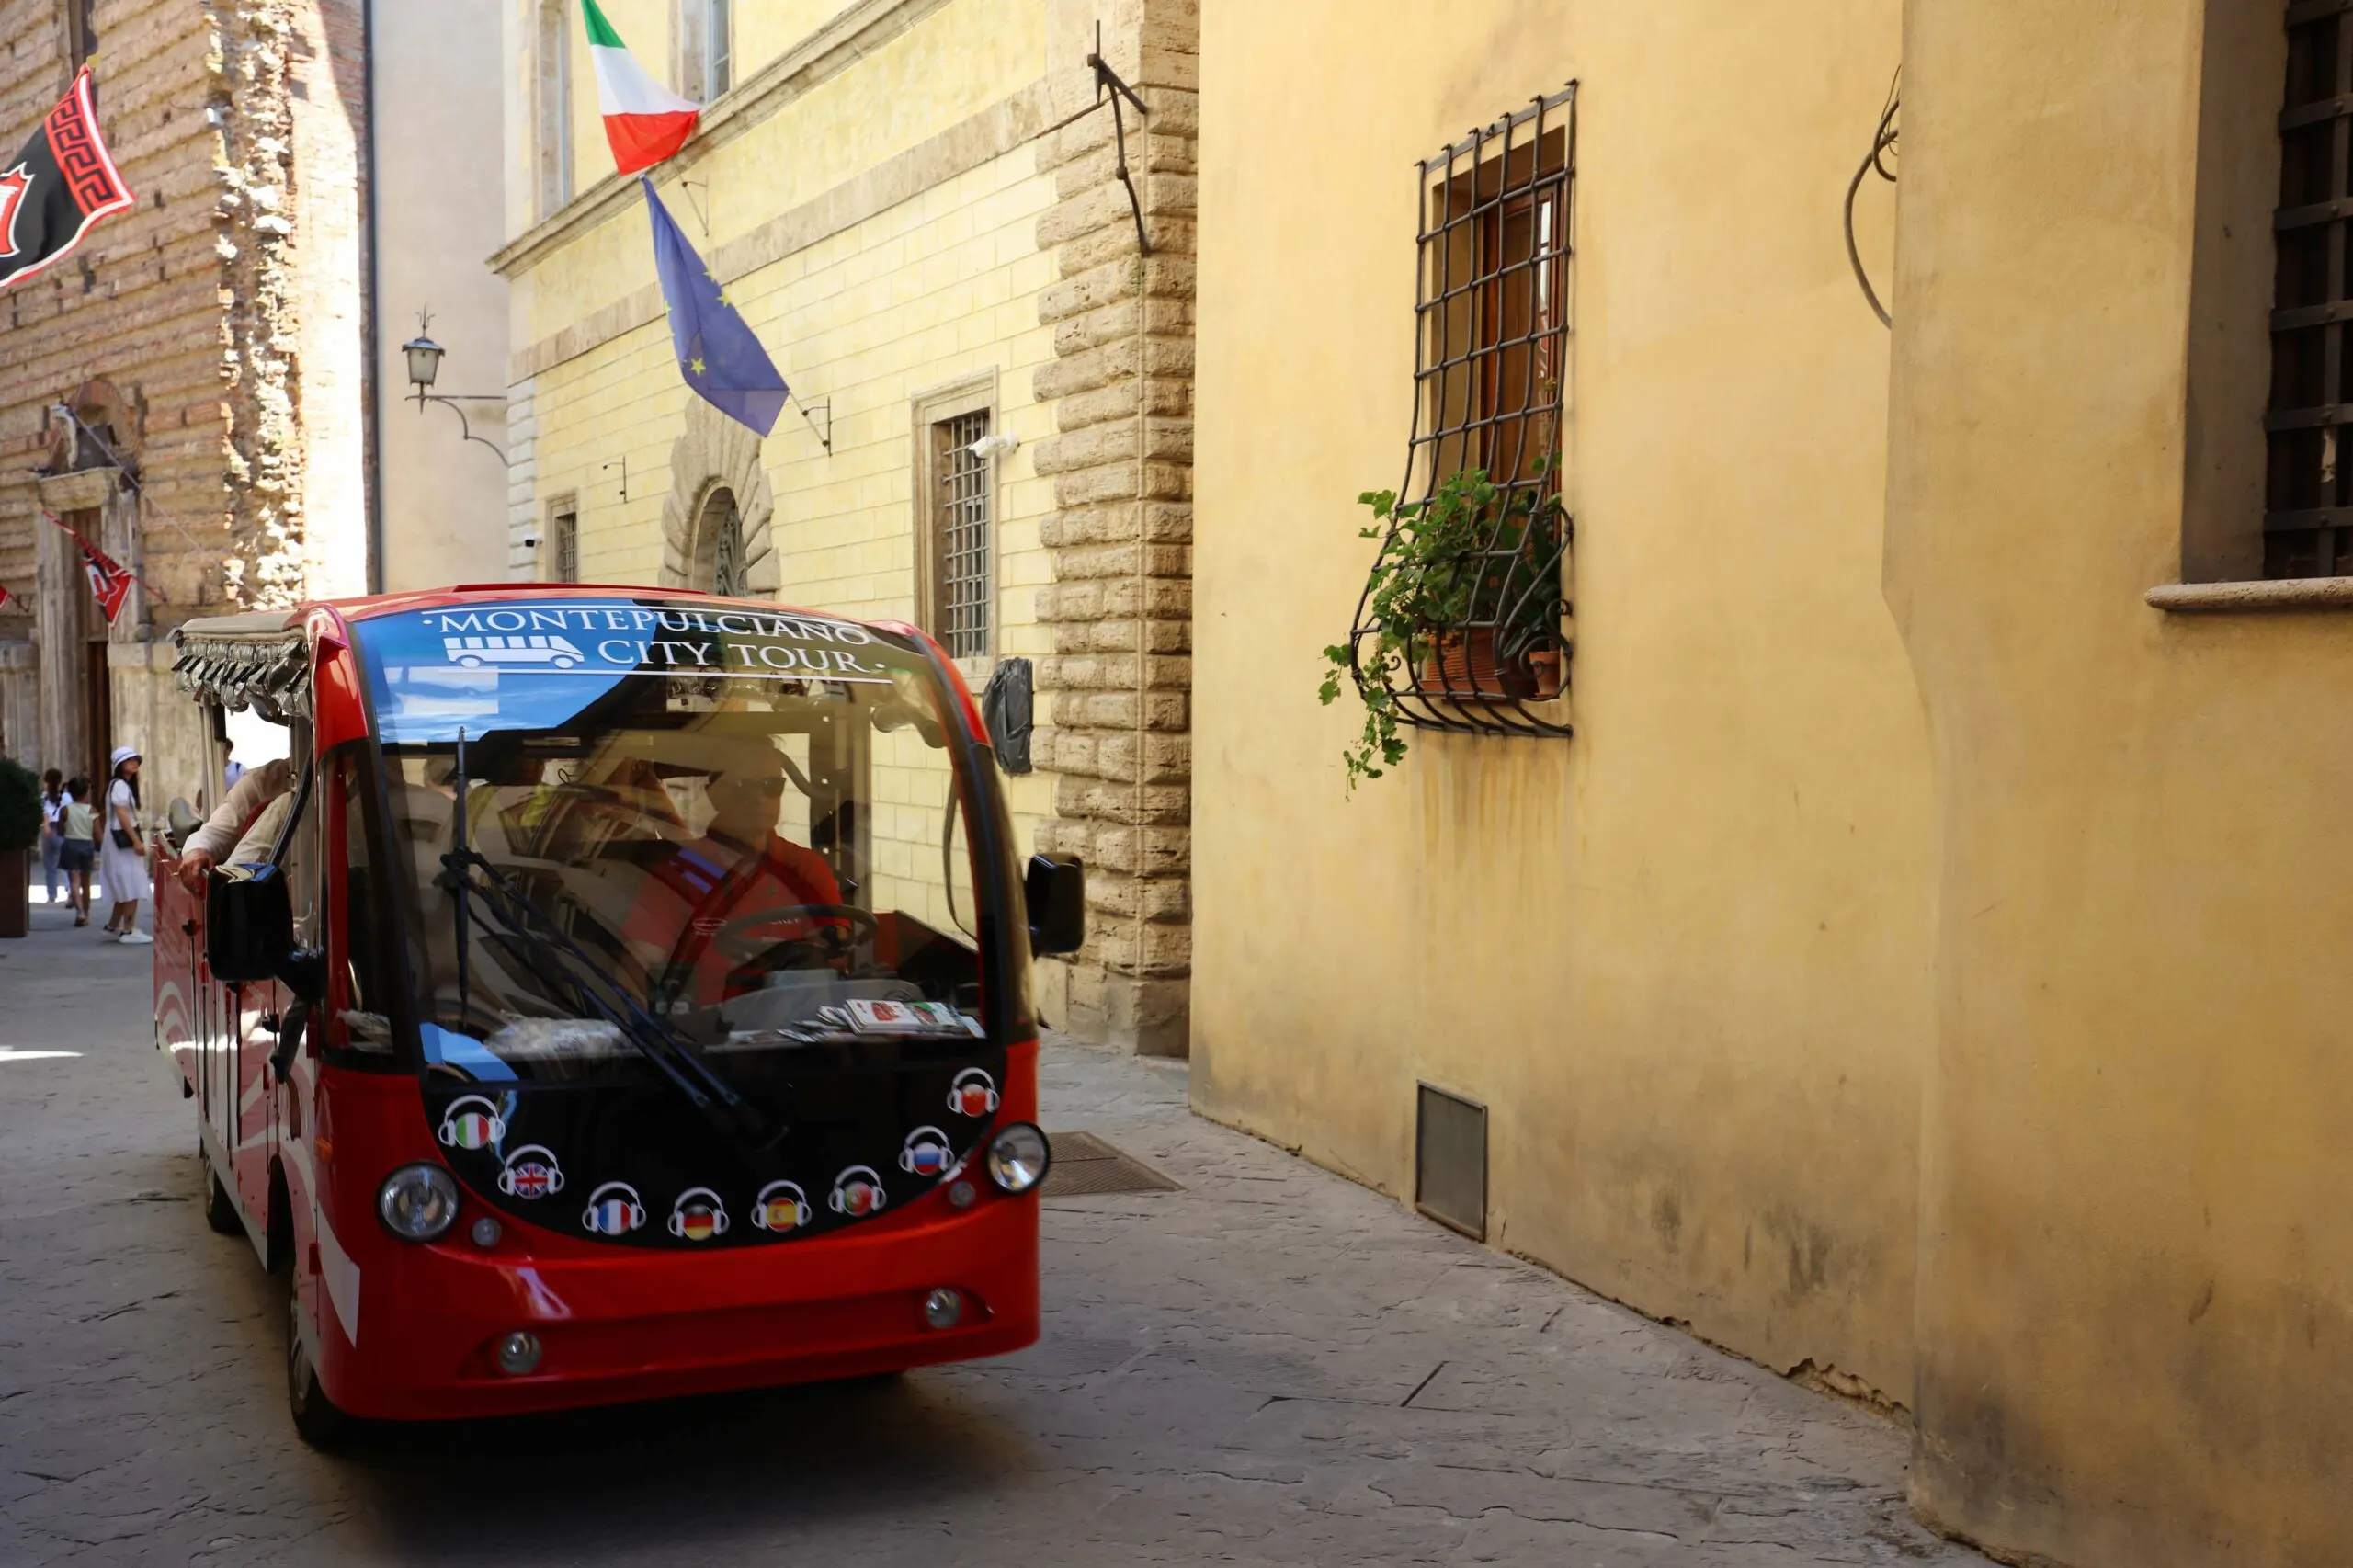 Montepulciano City Tour hop on hop off bus